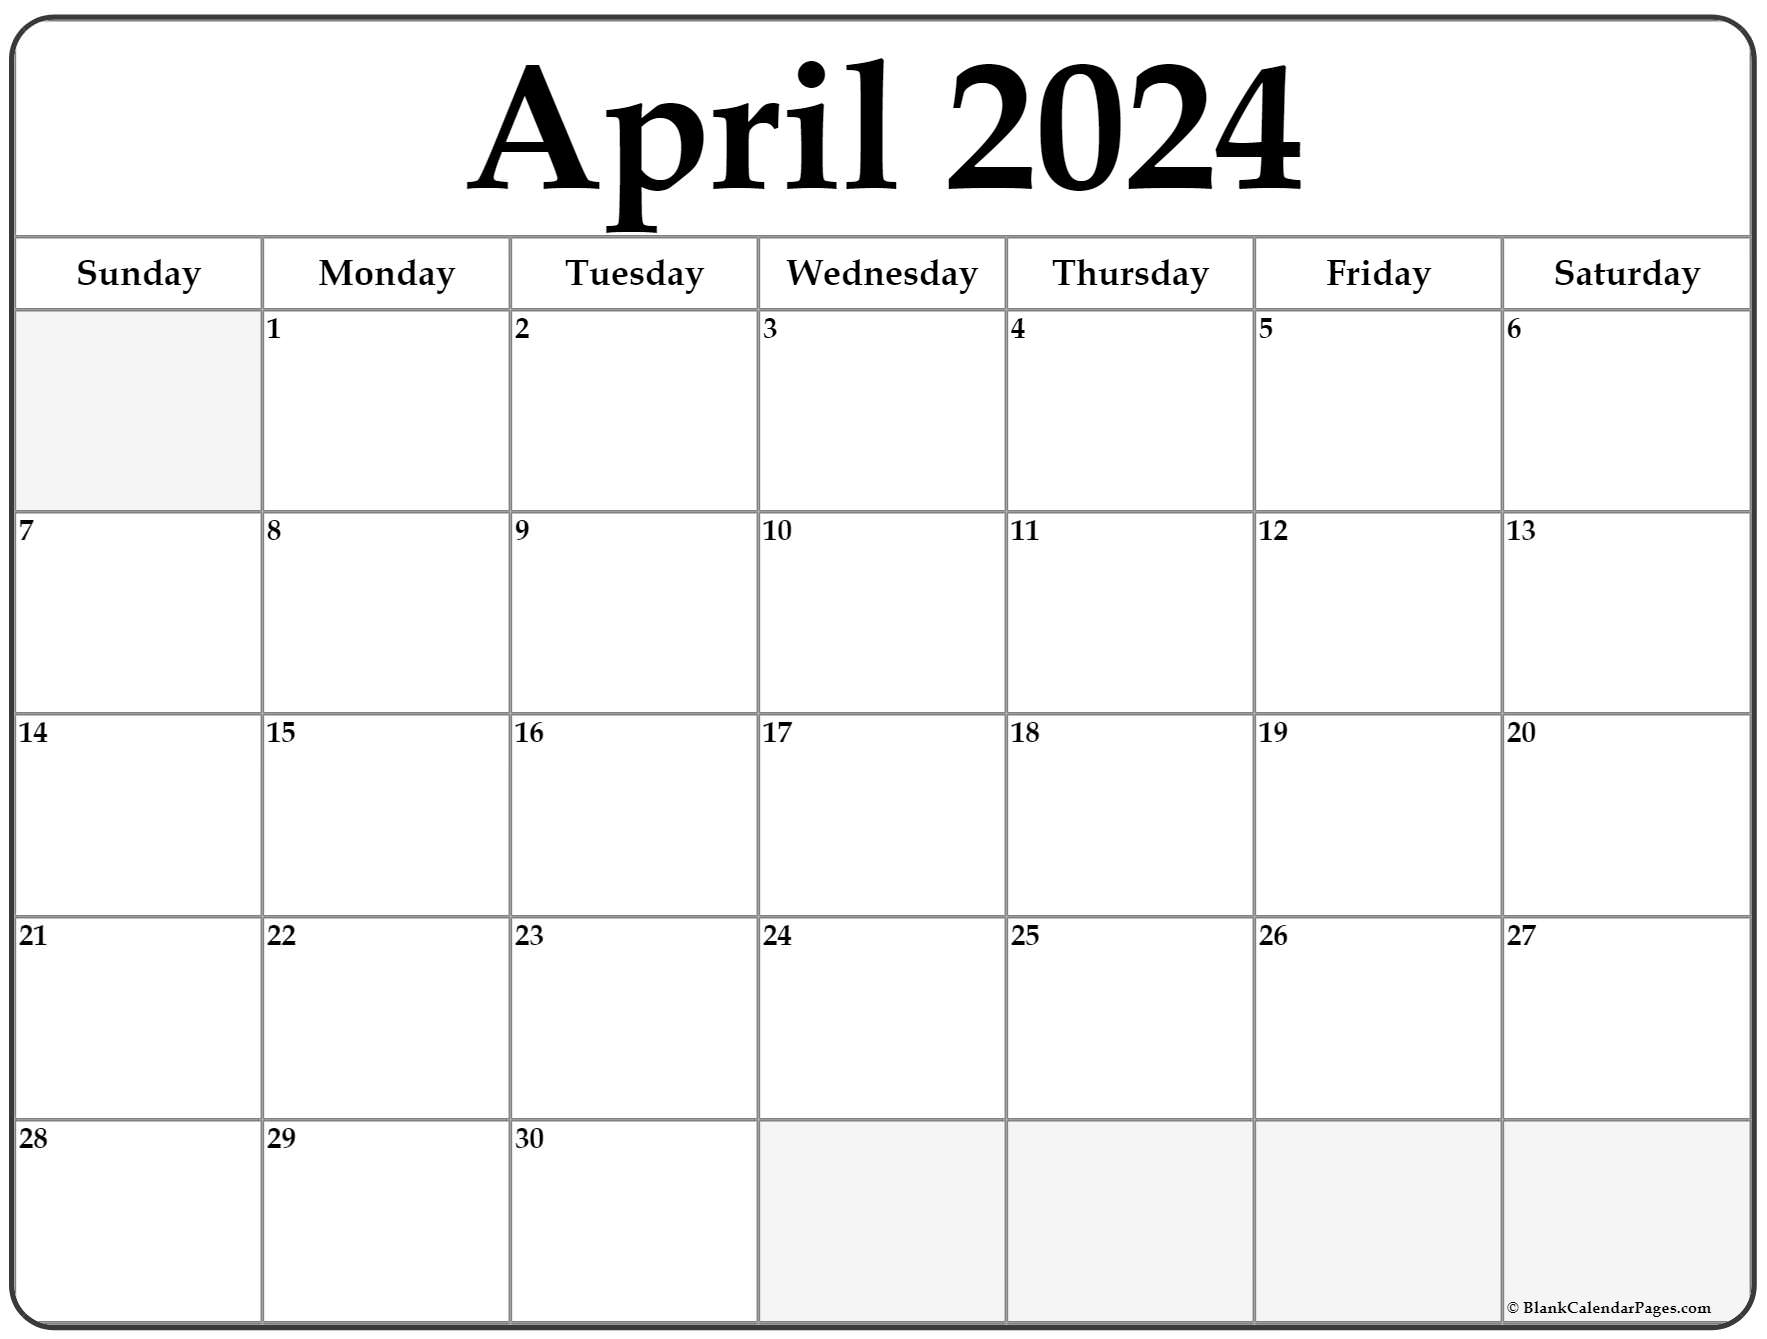 Blank Calendar Template April 2024 olga maureen